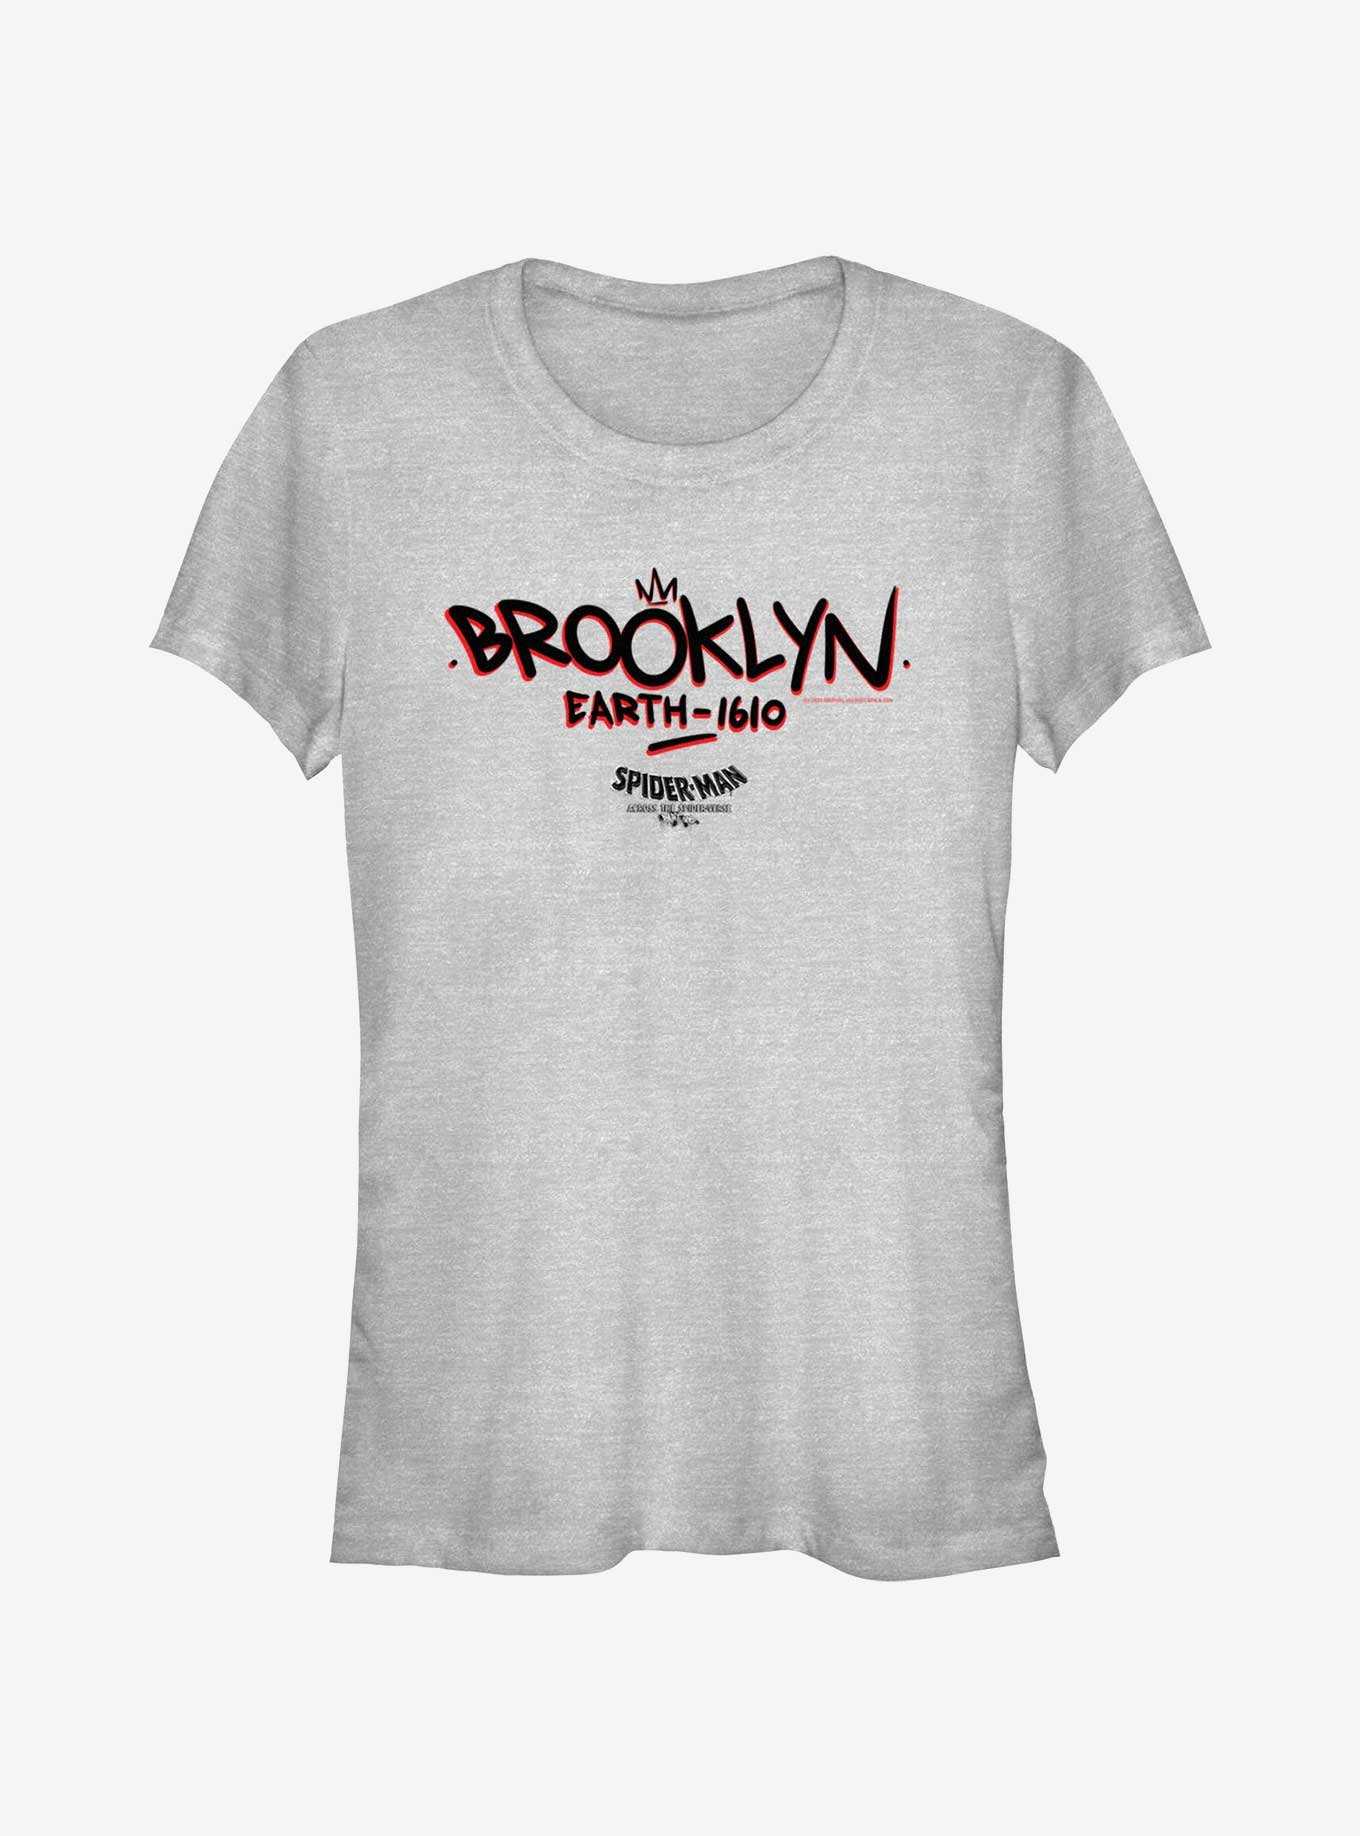 Spider-Man Brooklyn Earth 1610 Girls T-Shirt, , hi-res